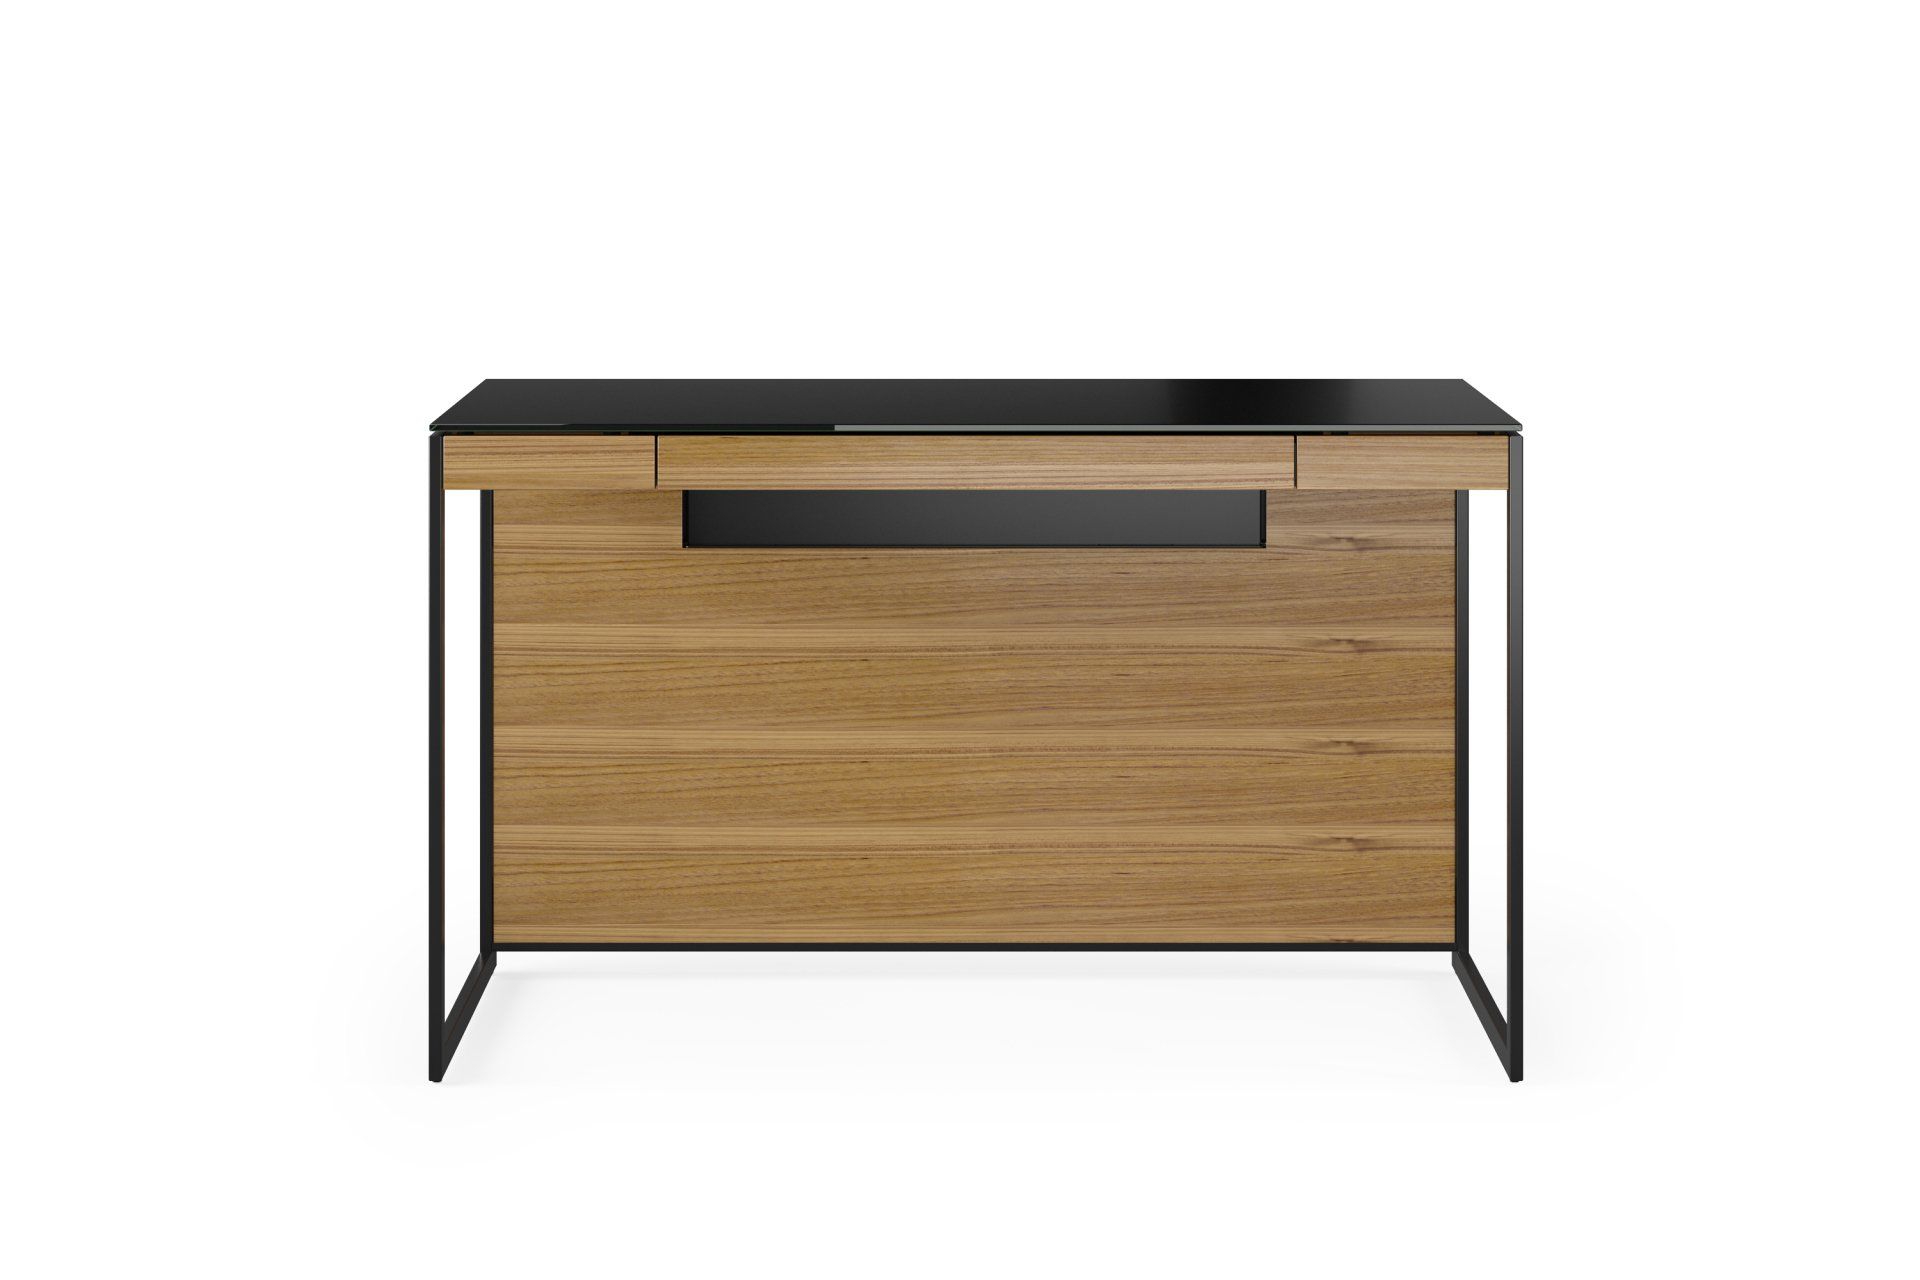 sequel-20-6103-compact-modern-small-office-black-glass-top-desk